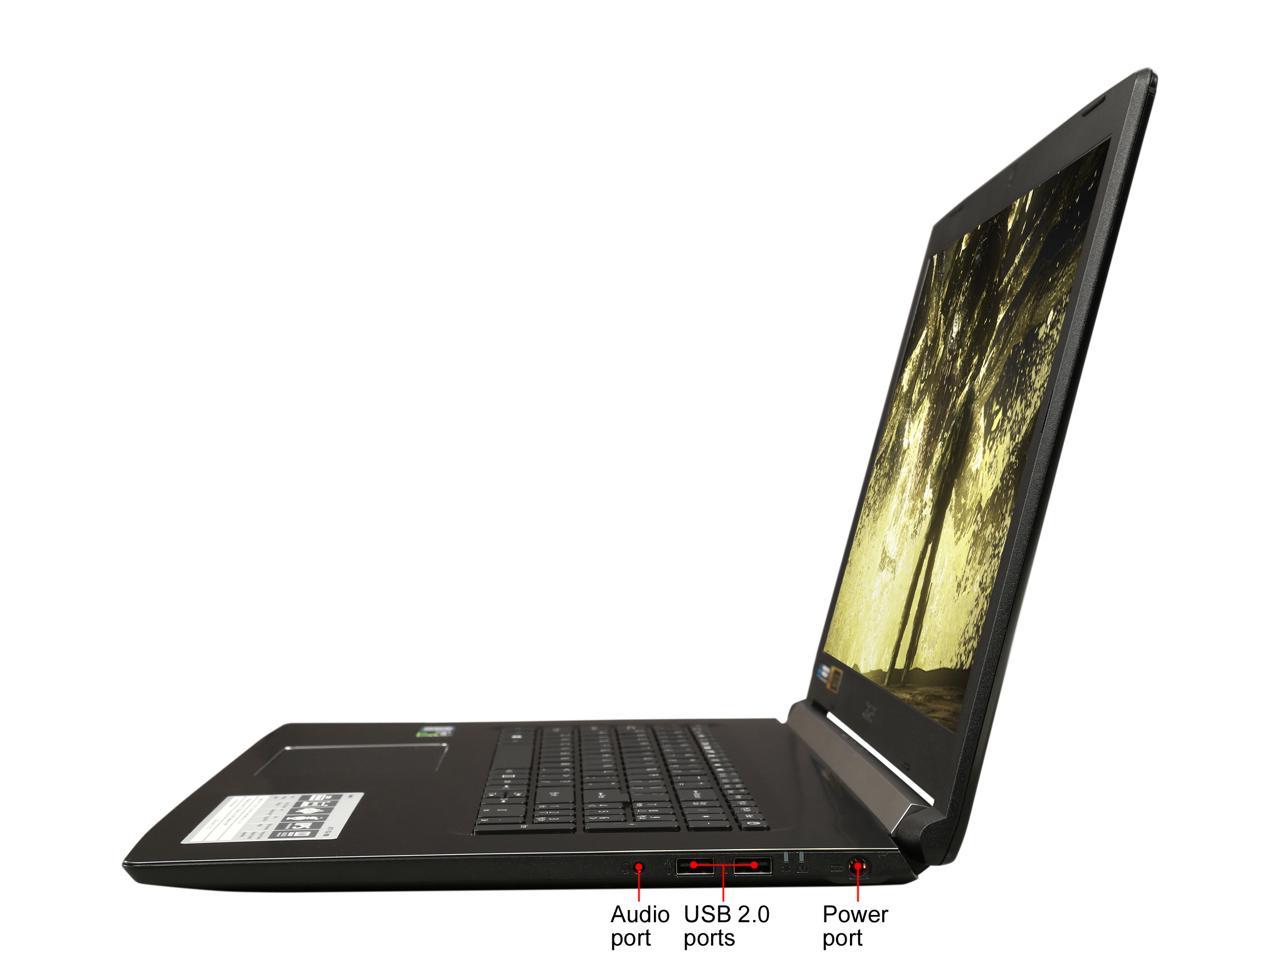 Acer - Gaming Laptop - 17.3" FHD IPS 60 Hz, Intel i7-8750H, NVIDIA GeForce GTX 1060 6 GB GDDR5, 16 GB Memory, 256 GB SSD, Windows 10 Home, VR Ready, Aspire 7 (A717-72G-700J) - ONLY @ NEWEGG